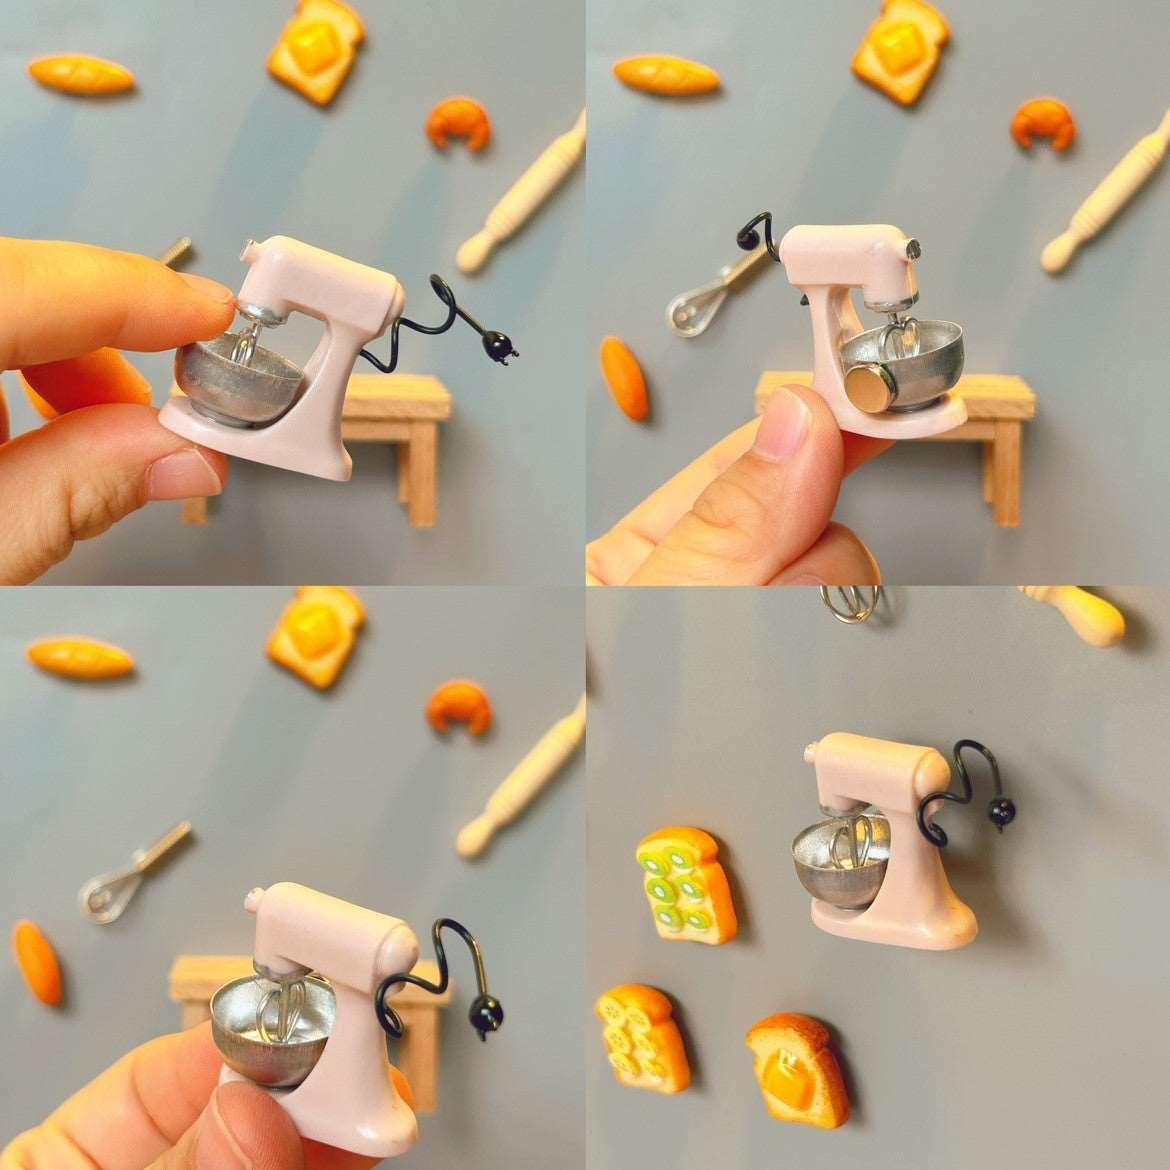 Mini Stand Mixer Baking Set Magnets Polychrome Goods